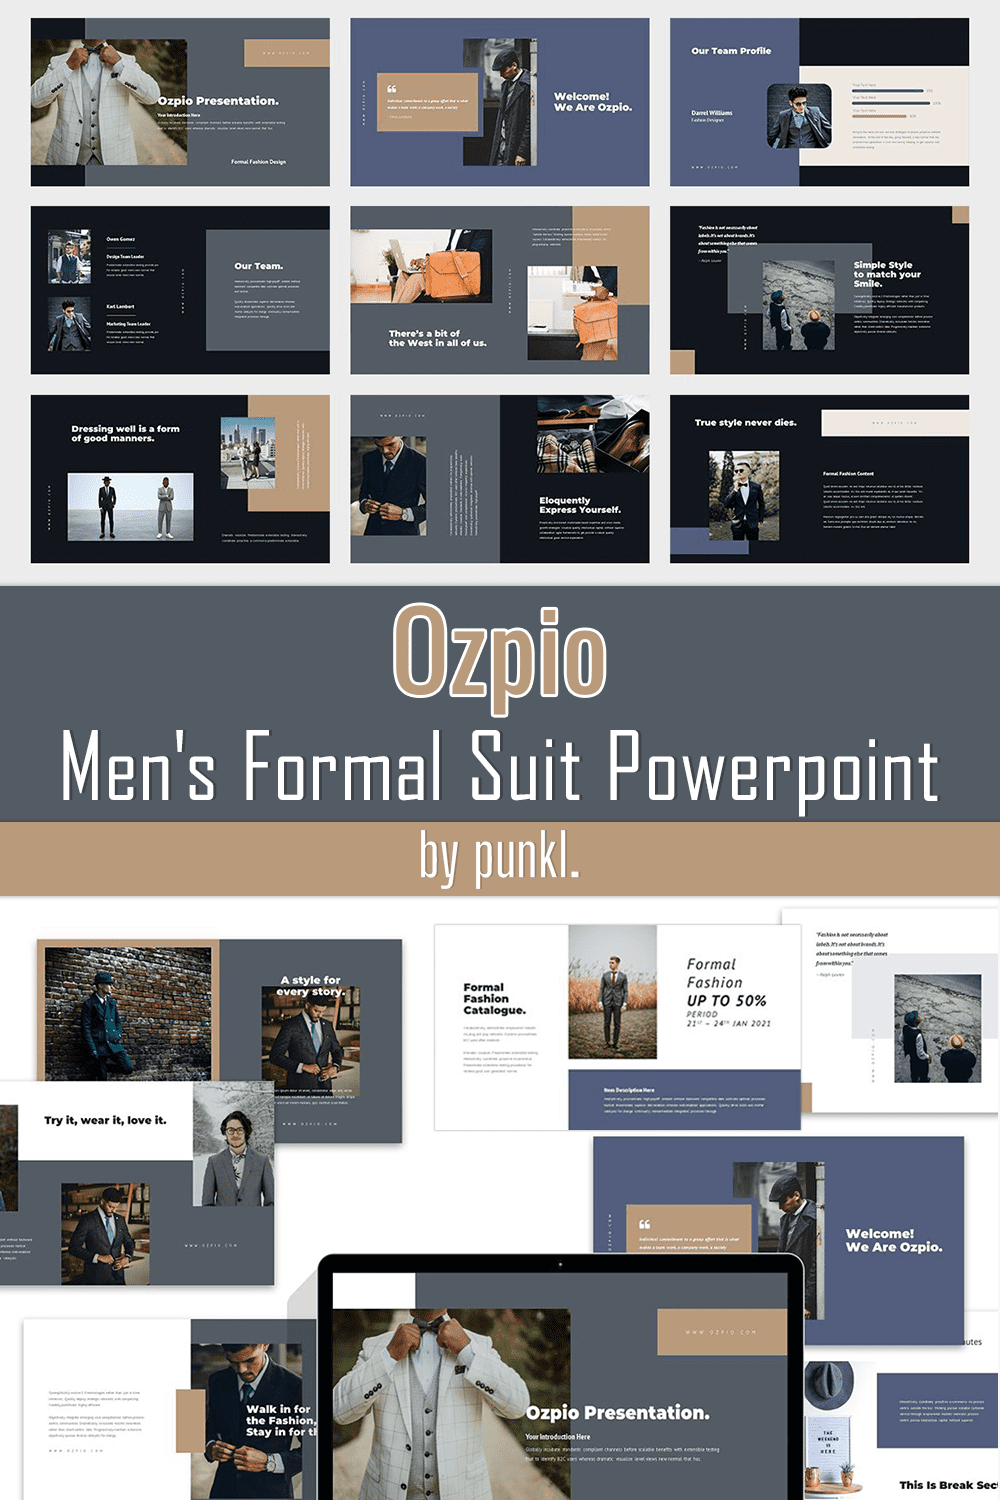 Ozpio : Men's Formal Suit Powerpoint - Pinterest.